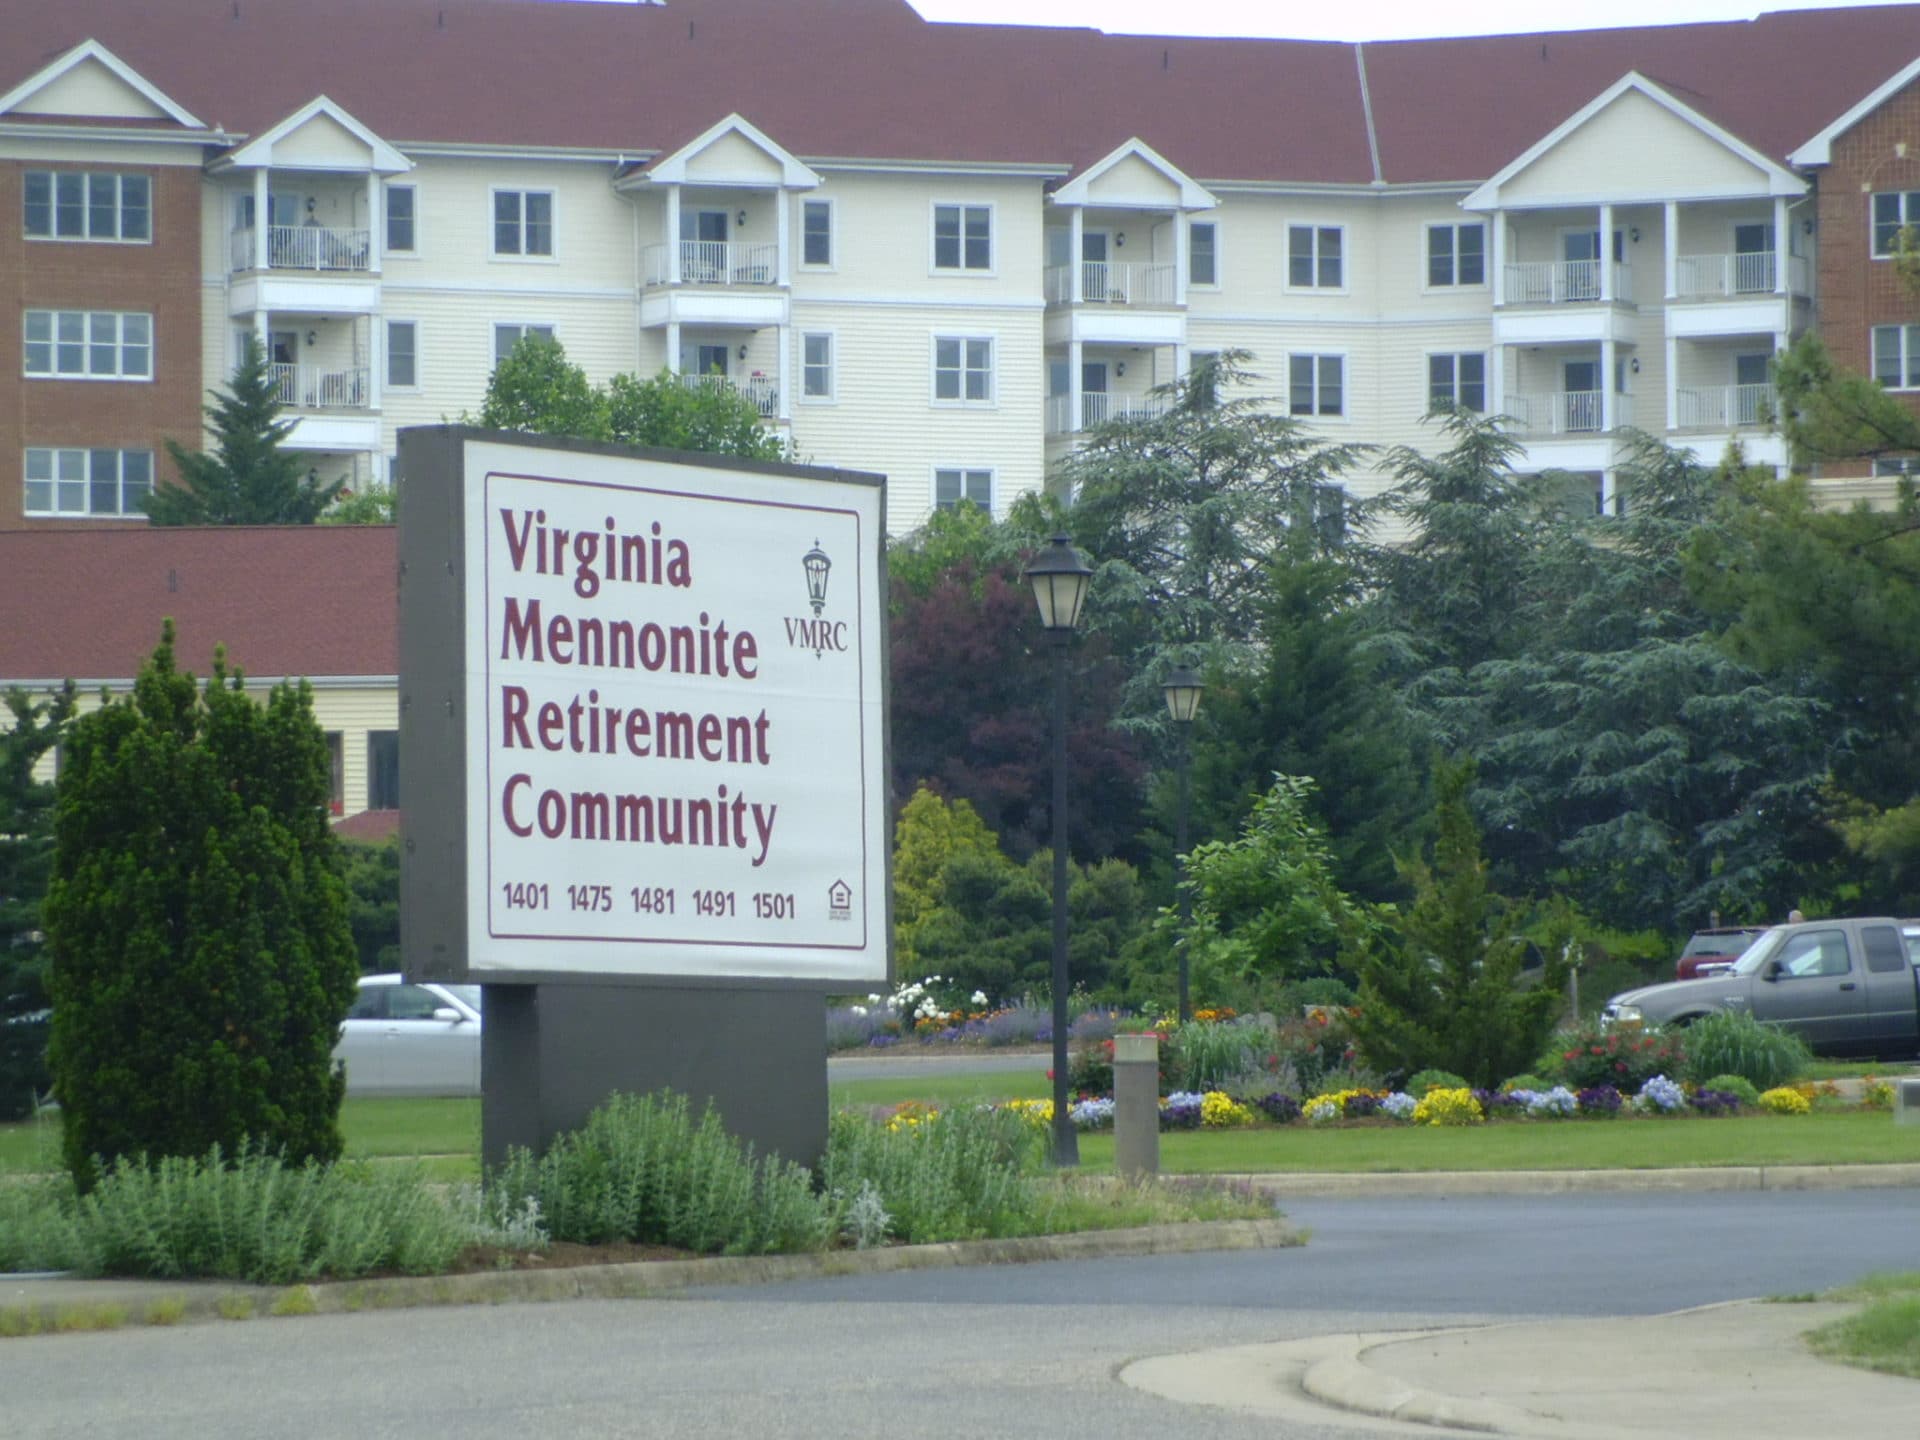 Virginia Mennonite Retirement Munity Riddleberger Brothers Inc